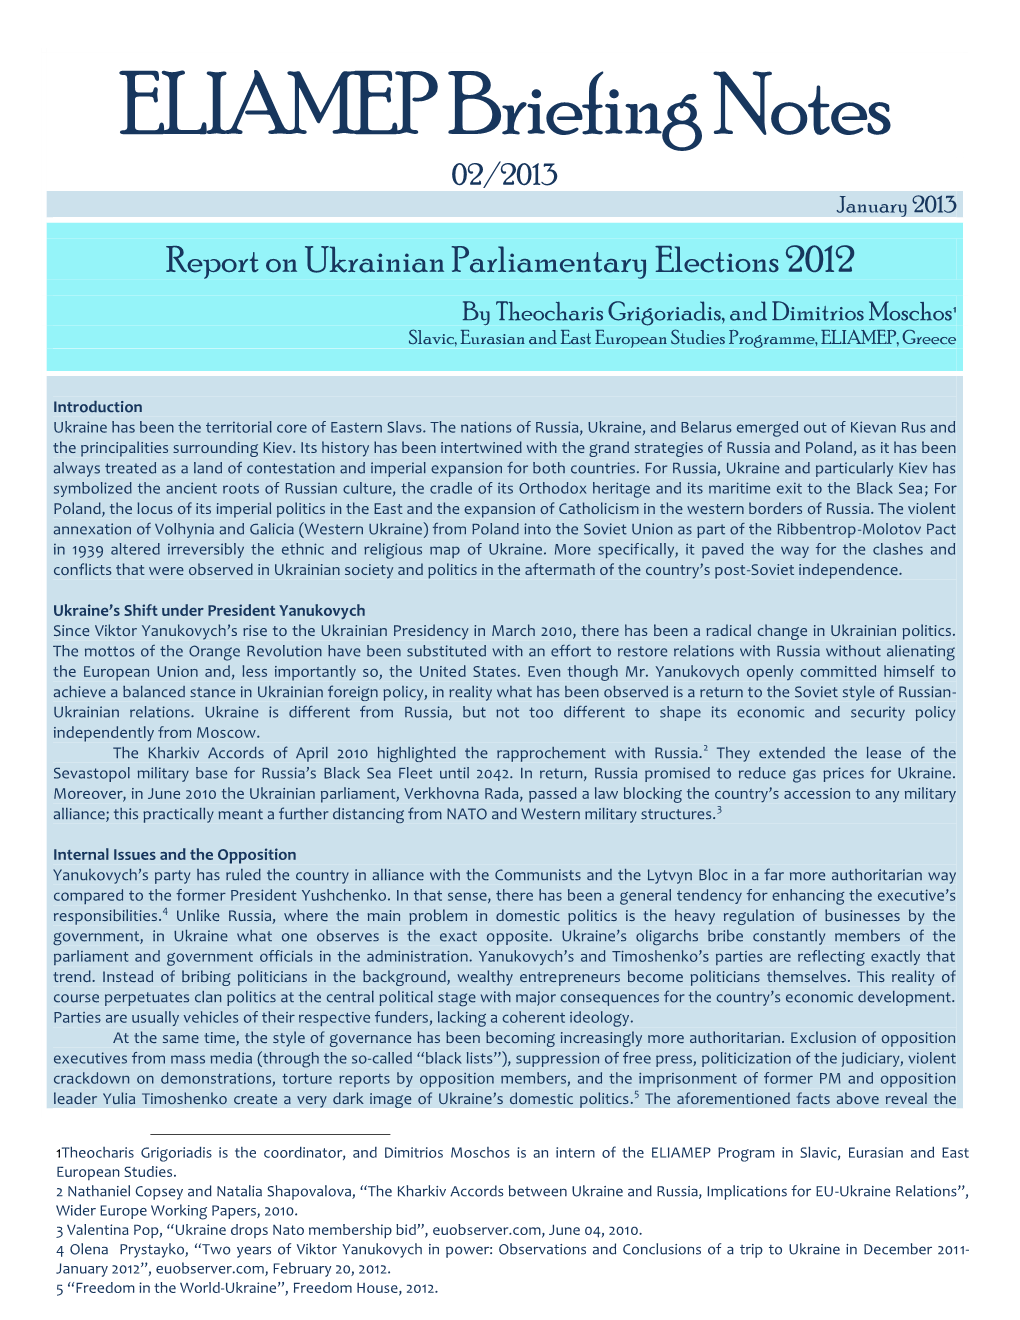 Report on Ukrainian Parliamentary Elections 2012